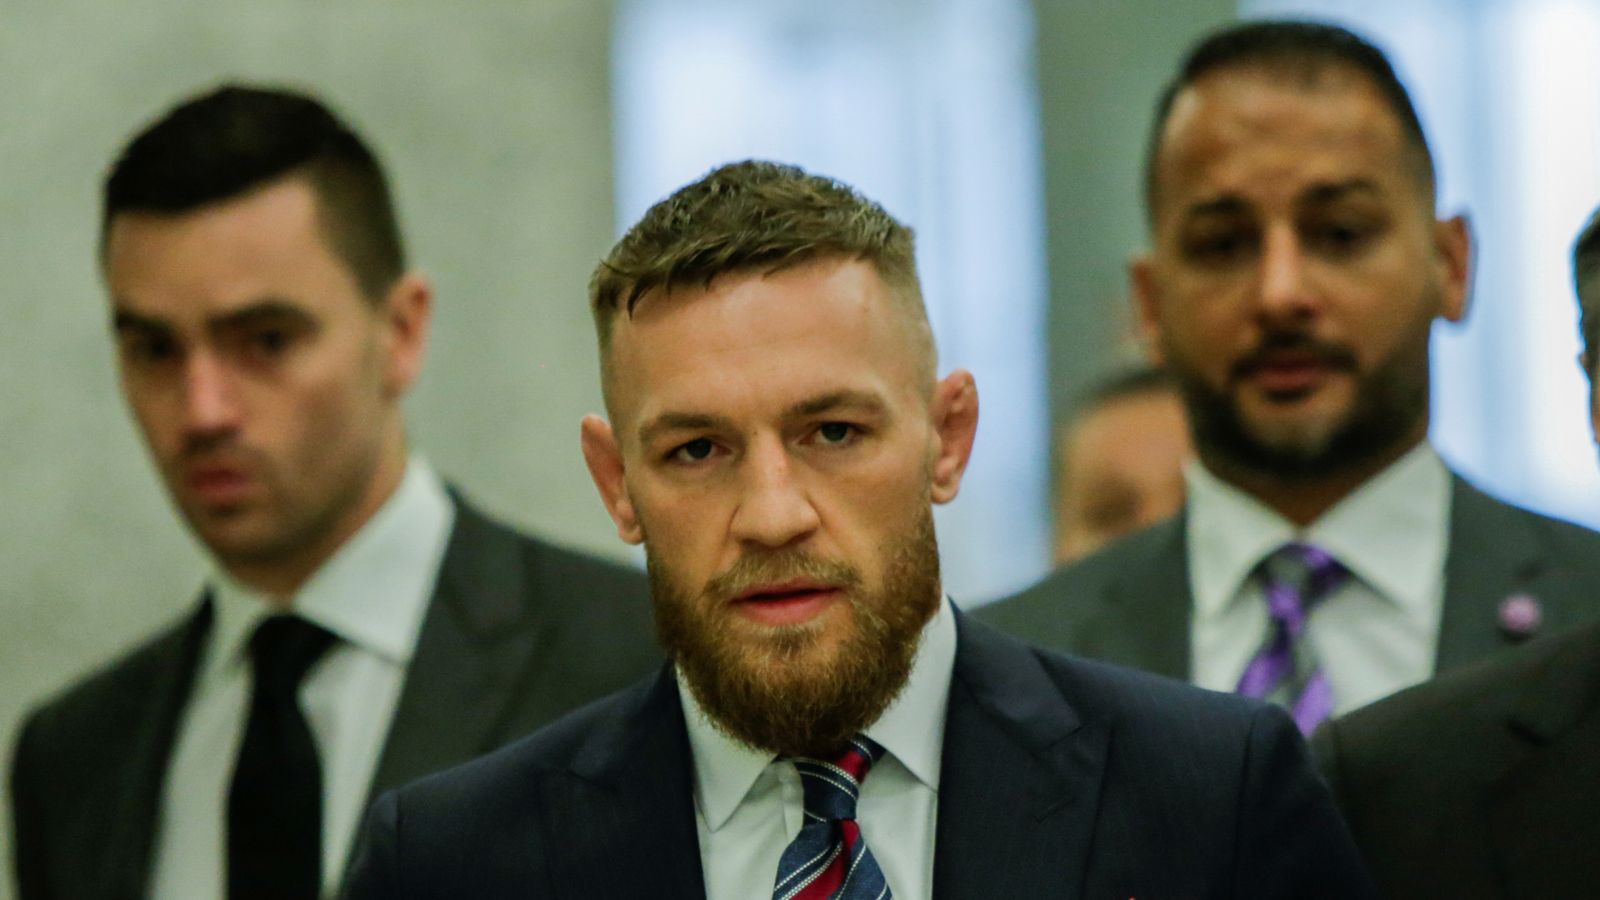 Court sends Conor McGregor to anger management over brawl | US News | Sky News